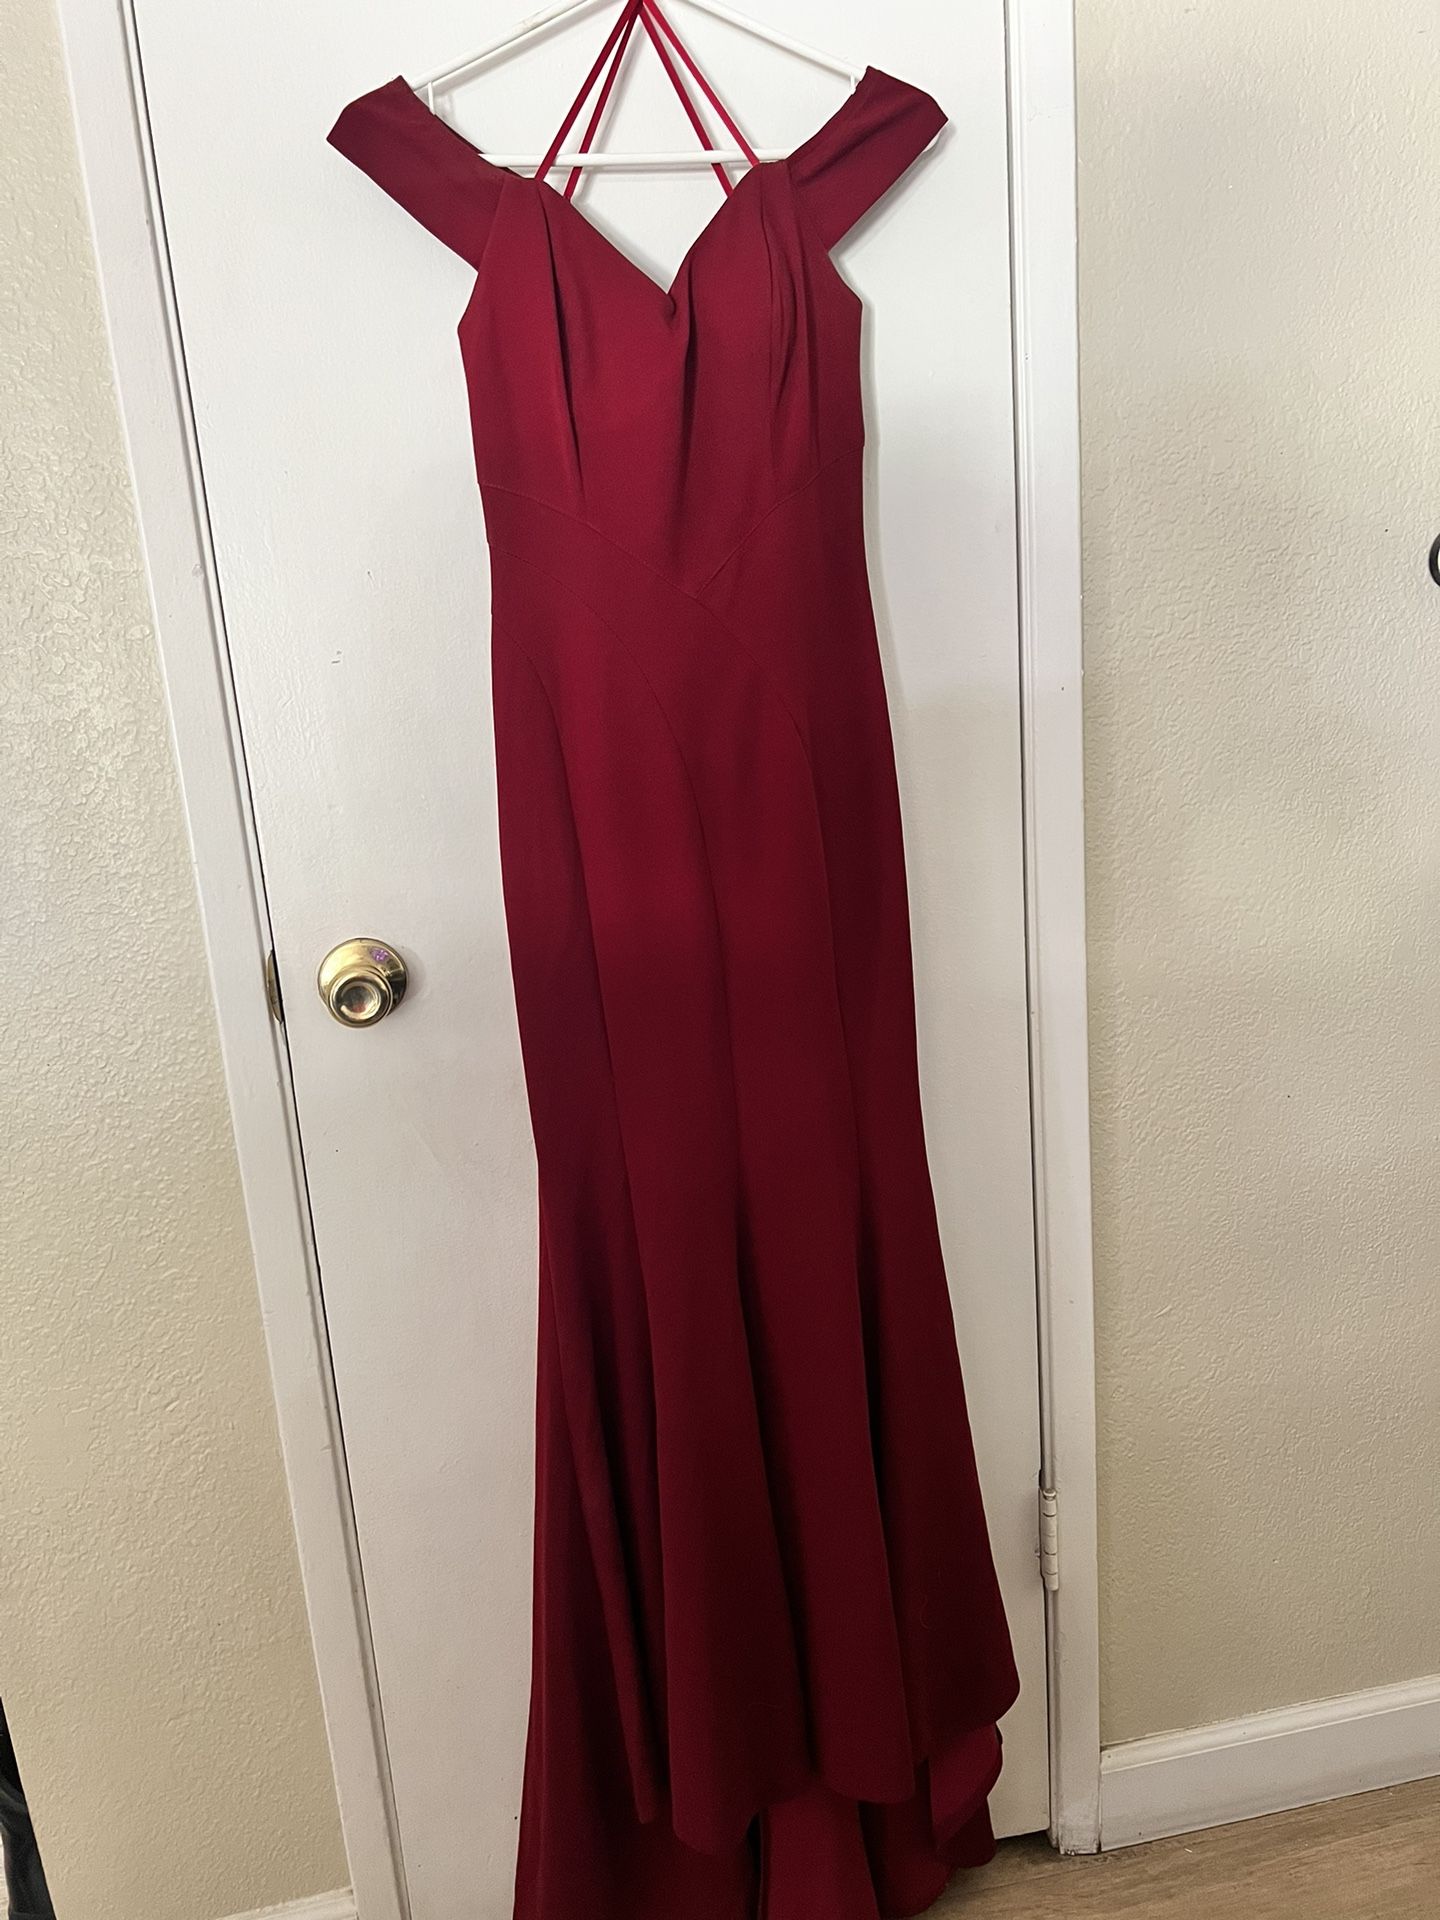 Burgundy Red Dress